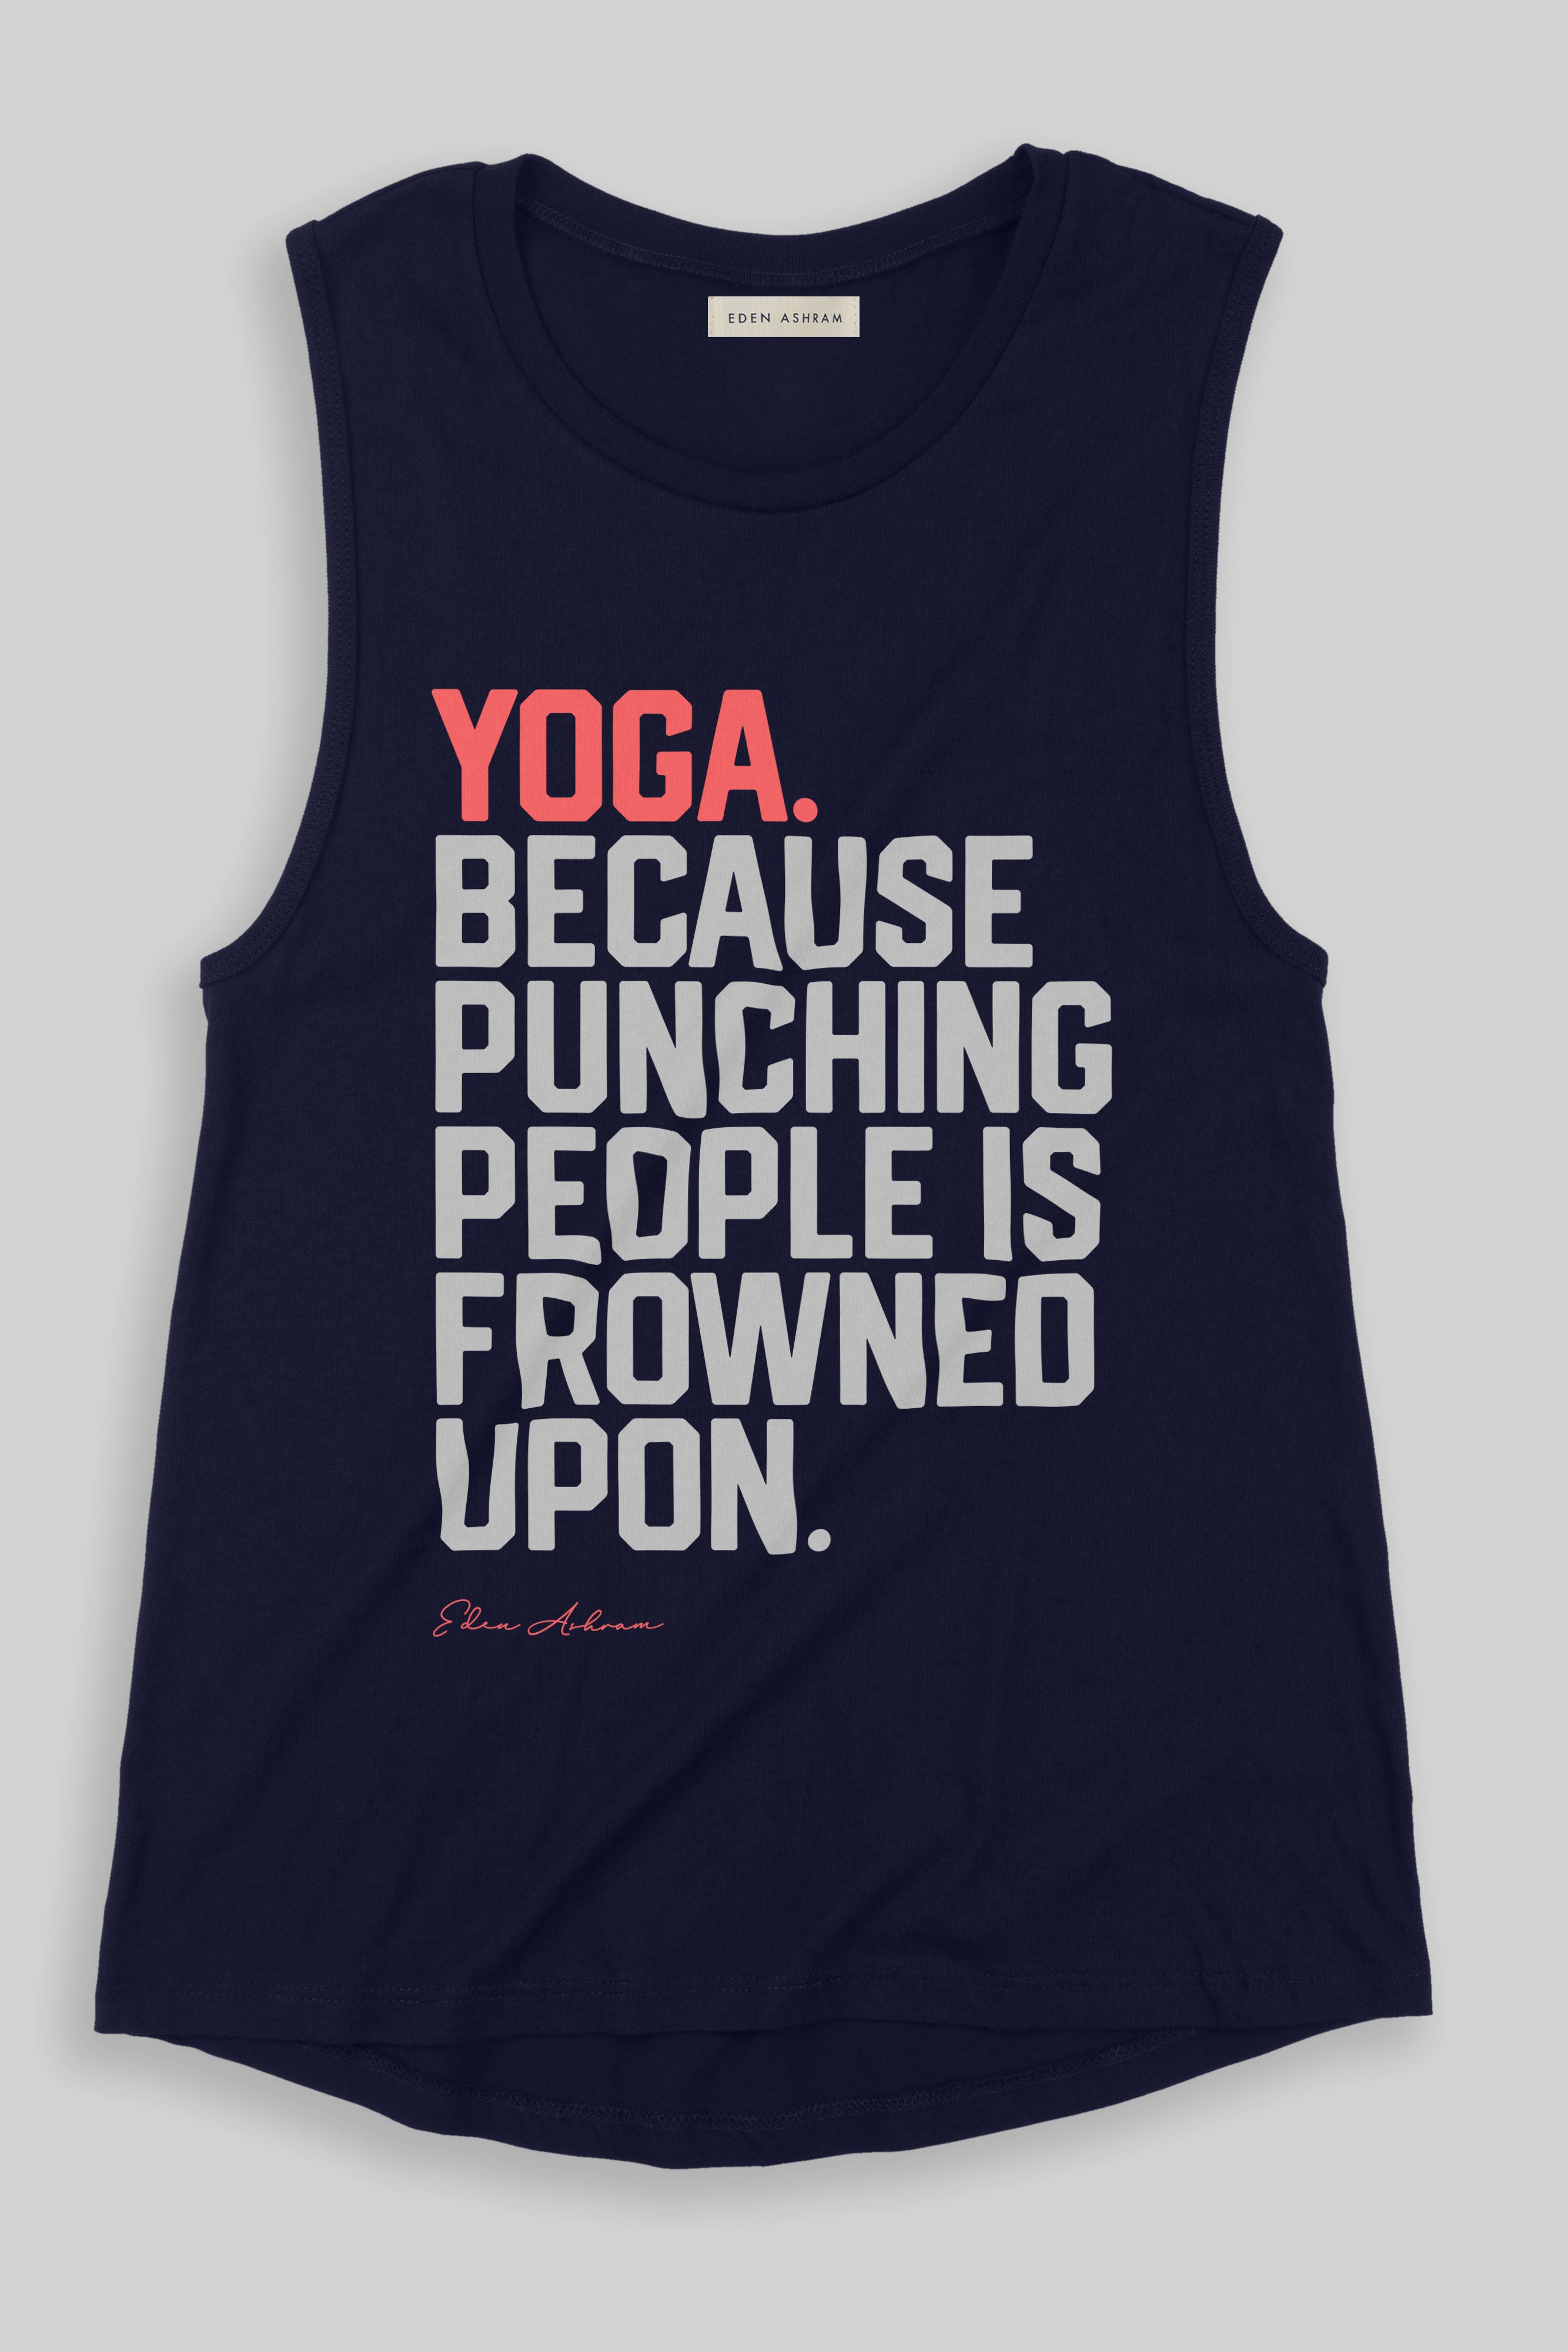 EDEN ASHRAM Yoga Because Punching People is Frowned Upon Premium Jersey Muscle Tank